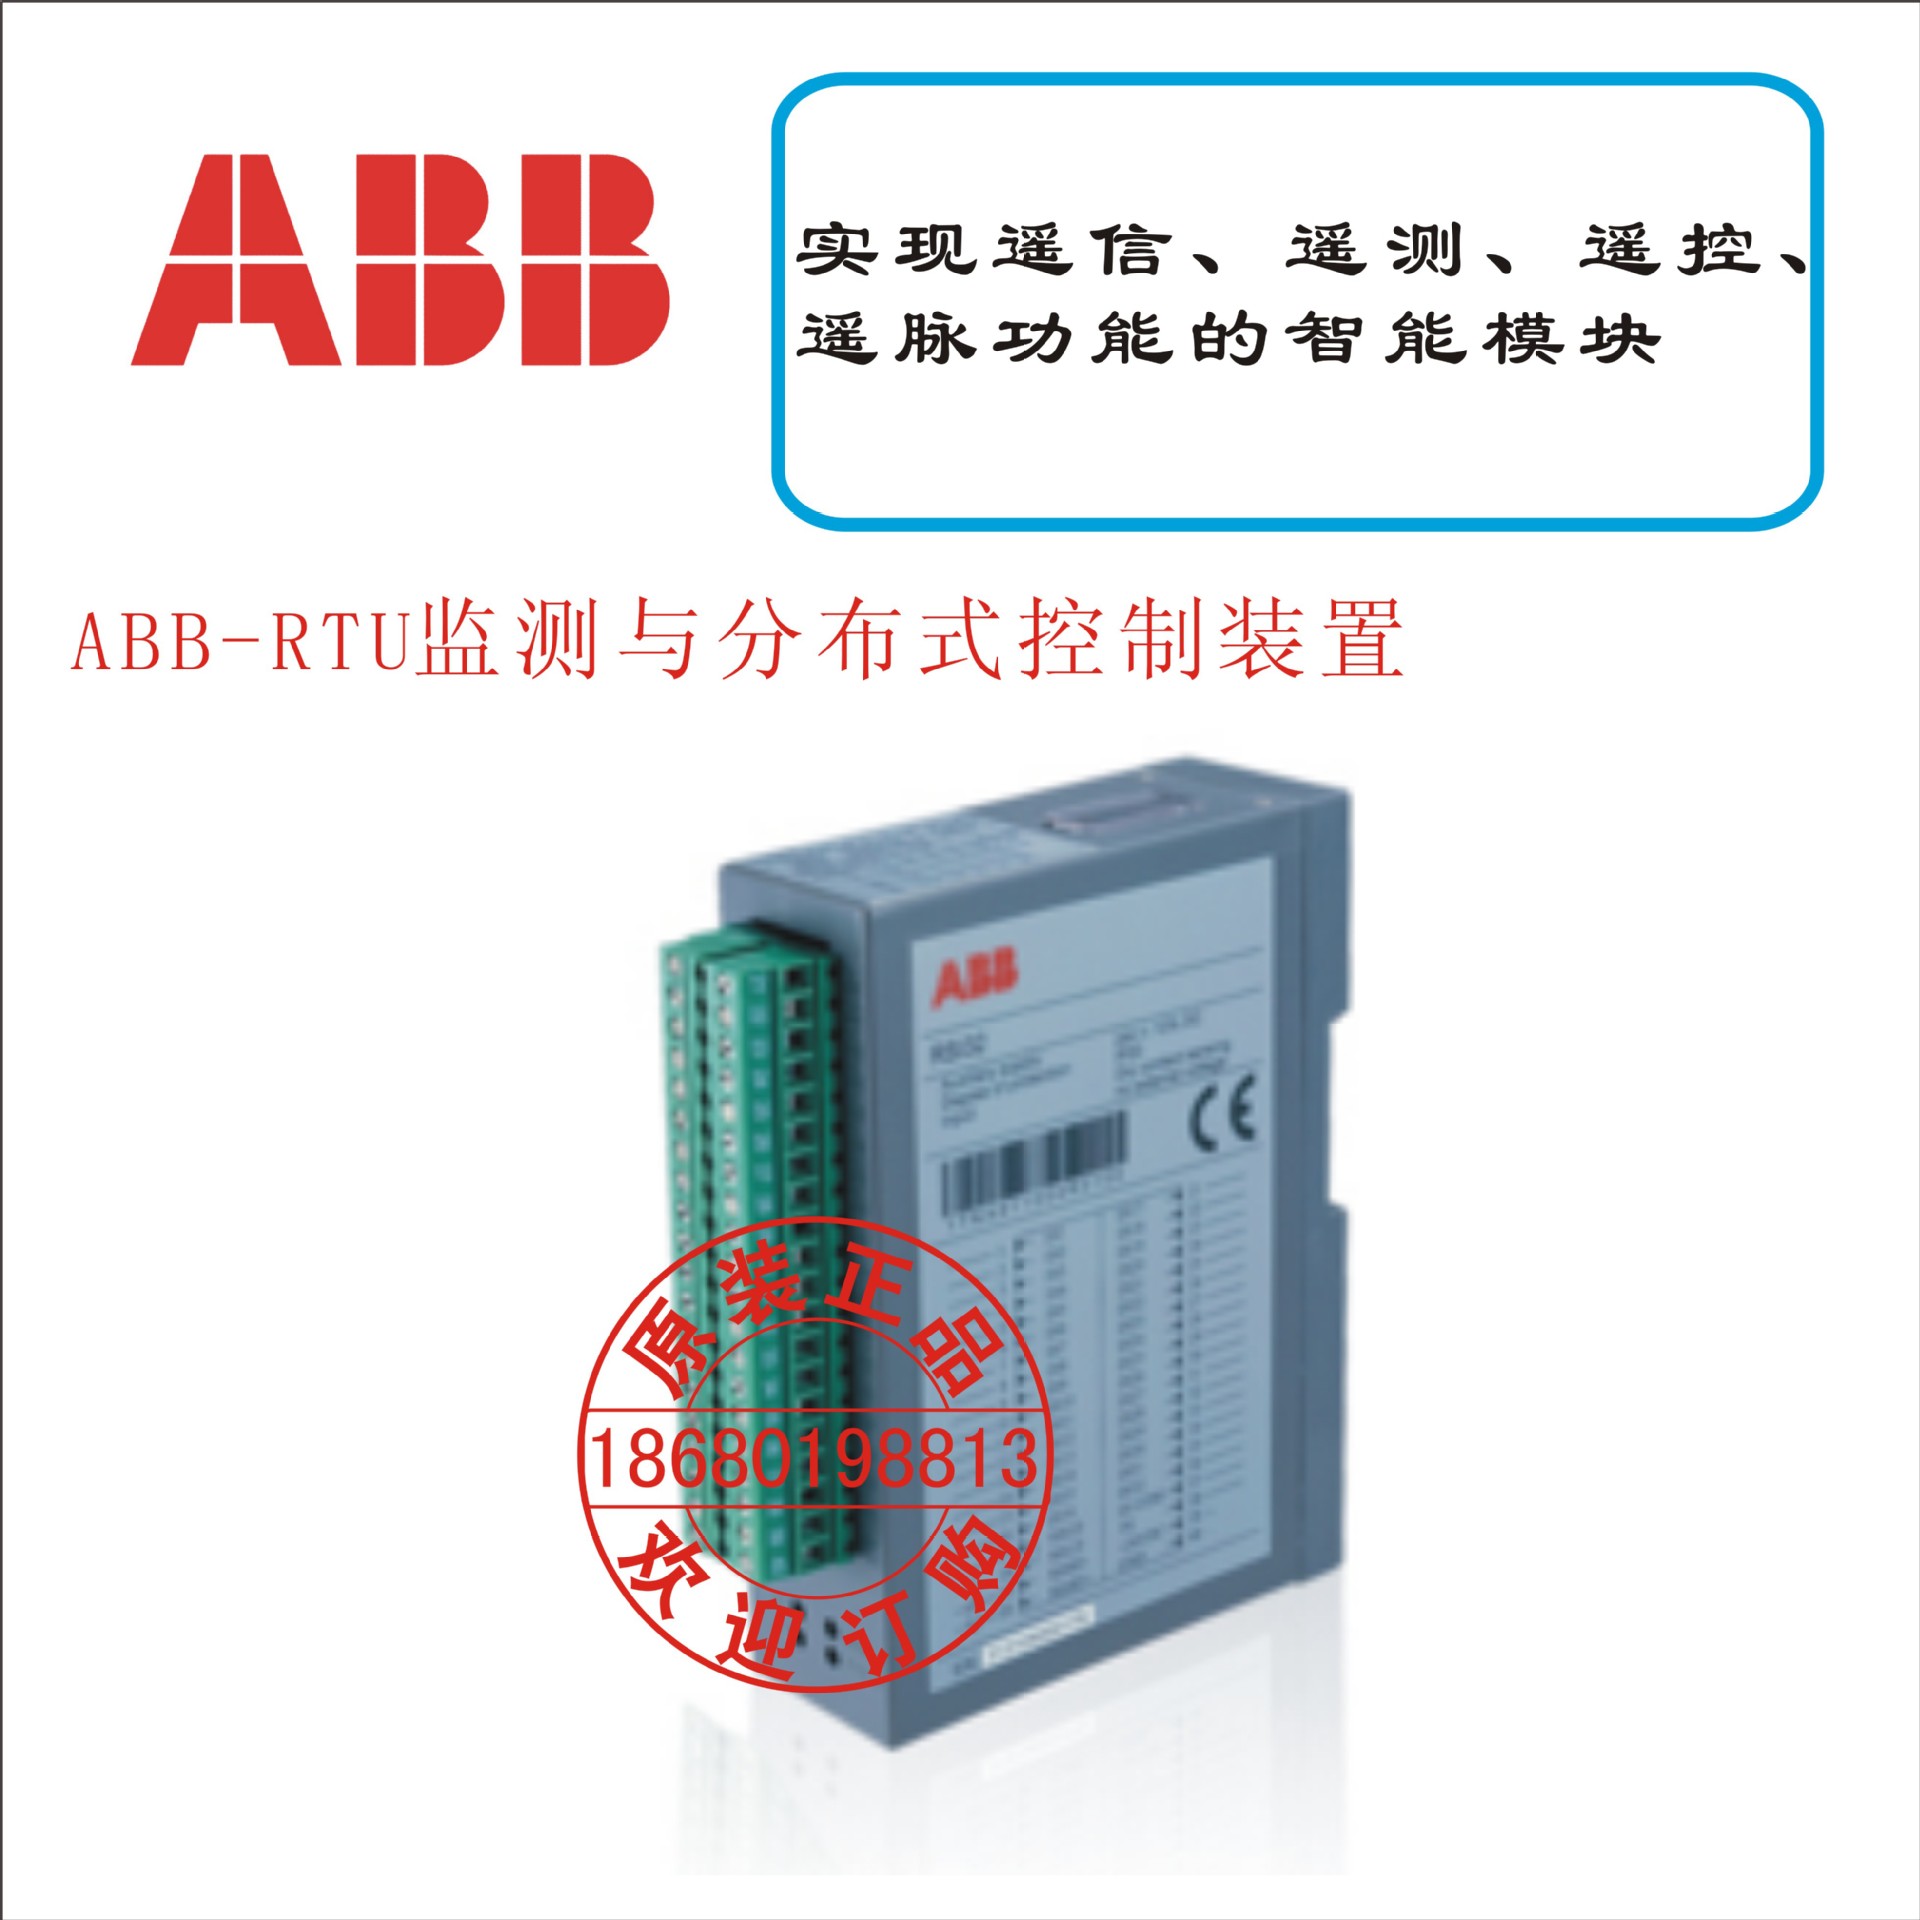 ABB-RTU监测与分布式控制装置